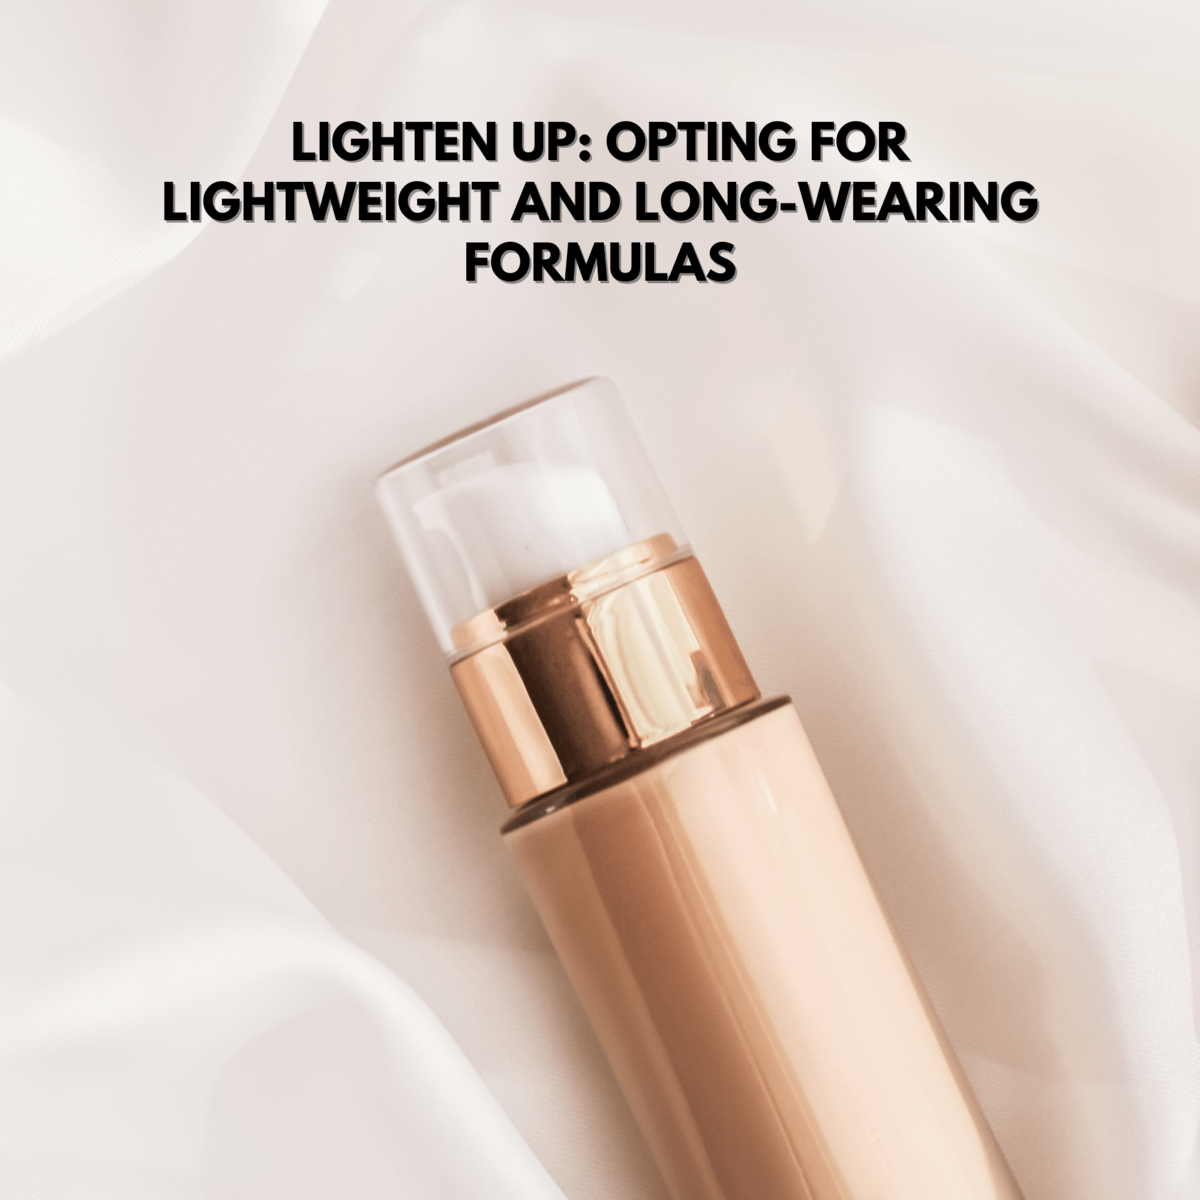 Lighten Up: Opting for Lightweight and Long-Wearing Formulas